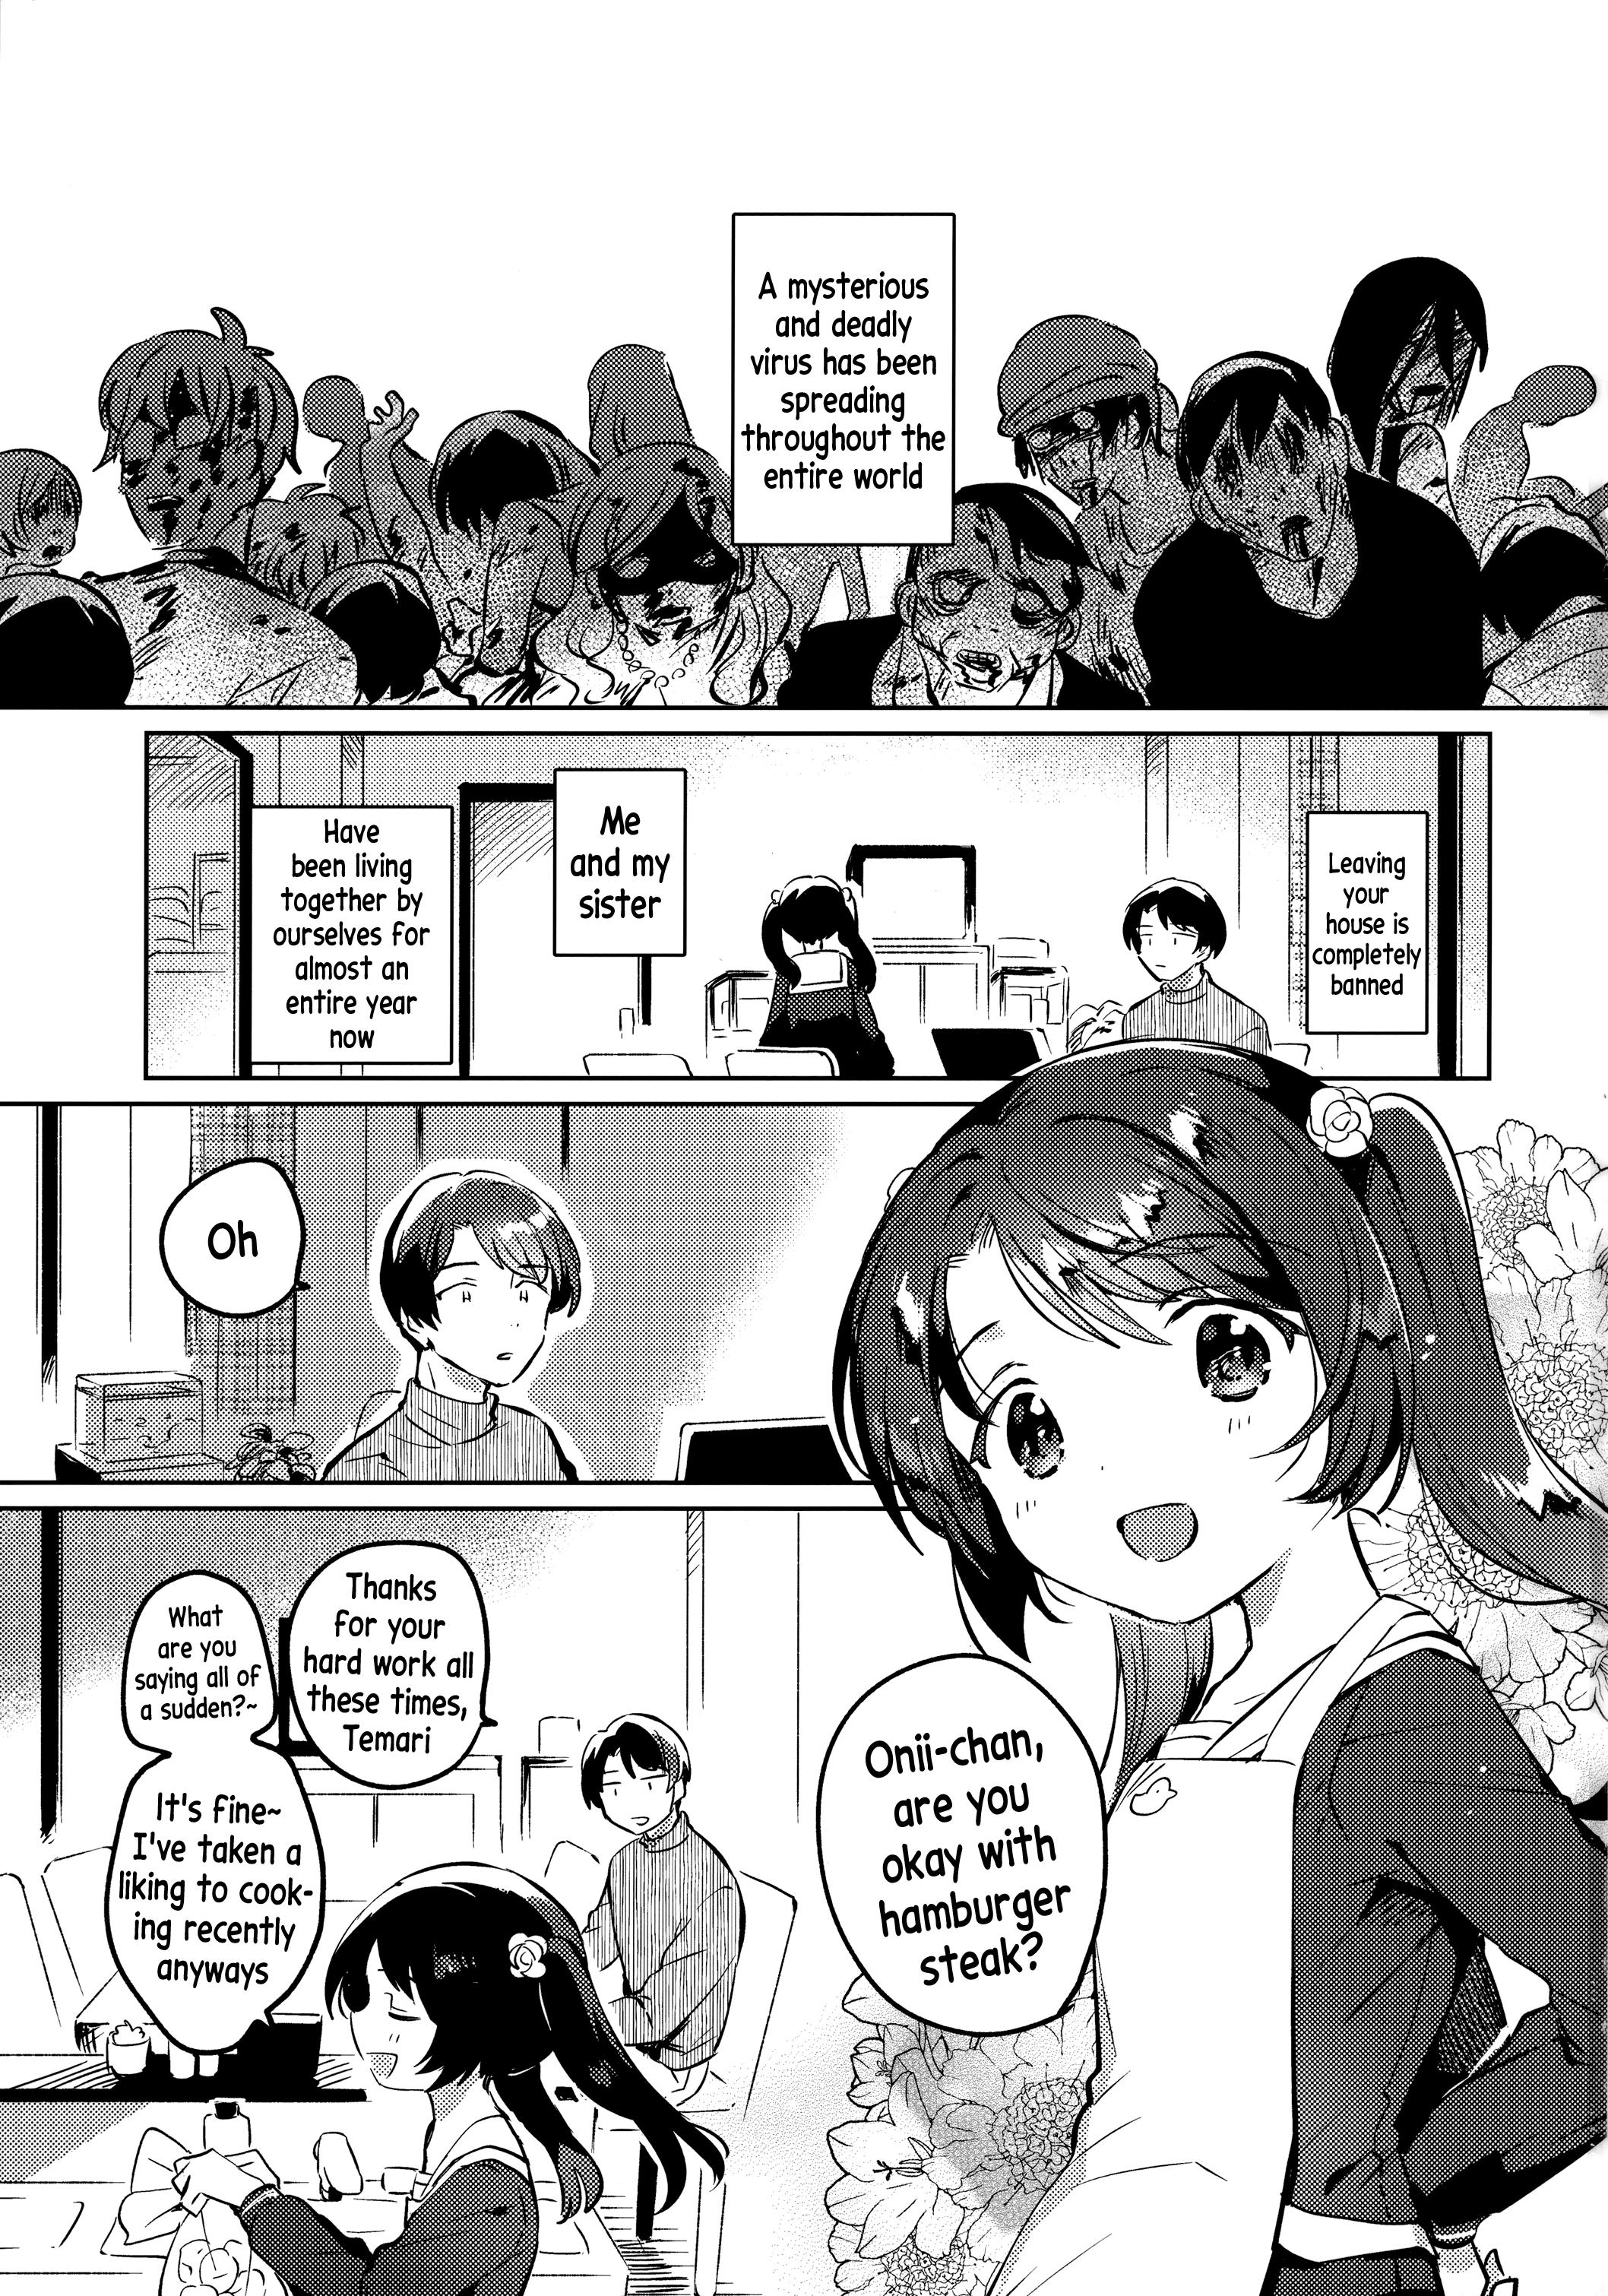 Page 3 | Imouto to Lockdown - Original Hentai Doujinshi by Squeeze Candy  Heaven - Pururin, Free Online Hentai Manga and Doujinshi Reader